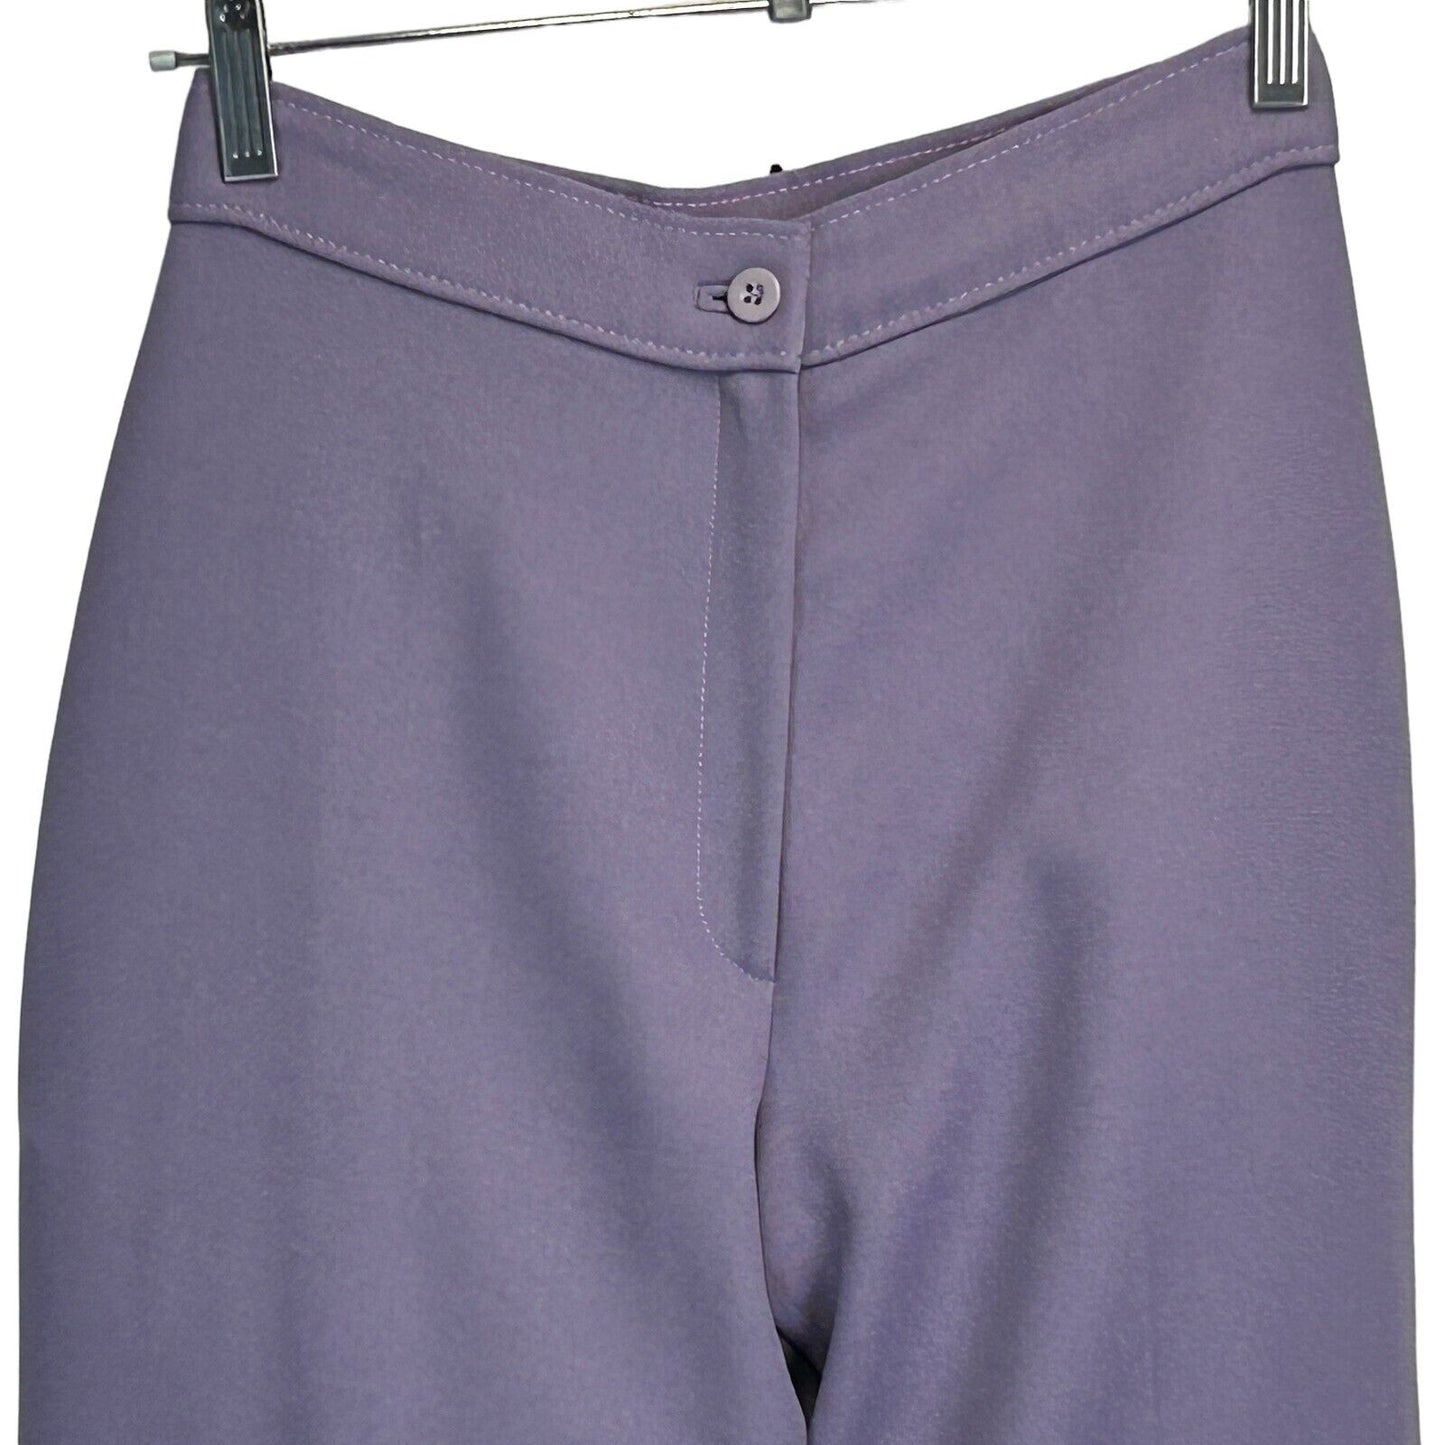 Vintage 60s Purple Womens Pants 1960s Polyester Size 24x29